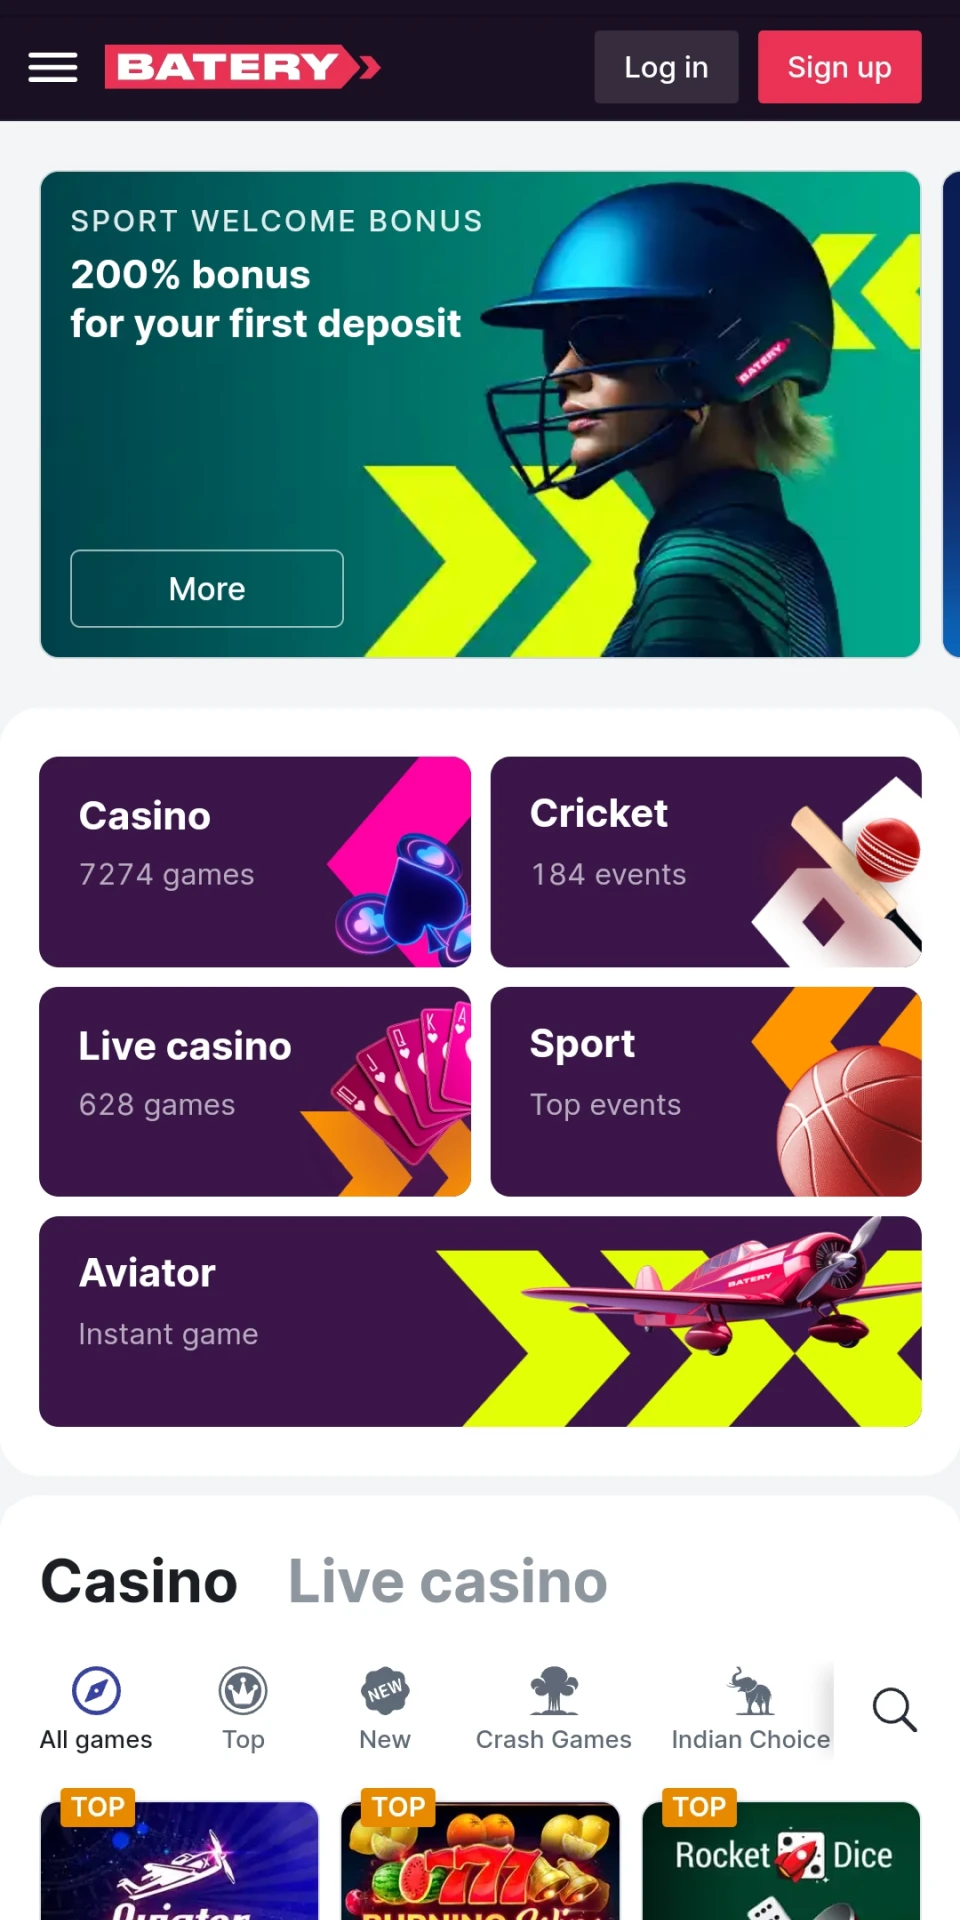 Batery Casino has a convenient mobile app.